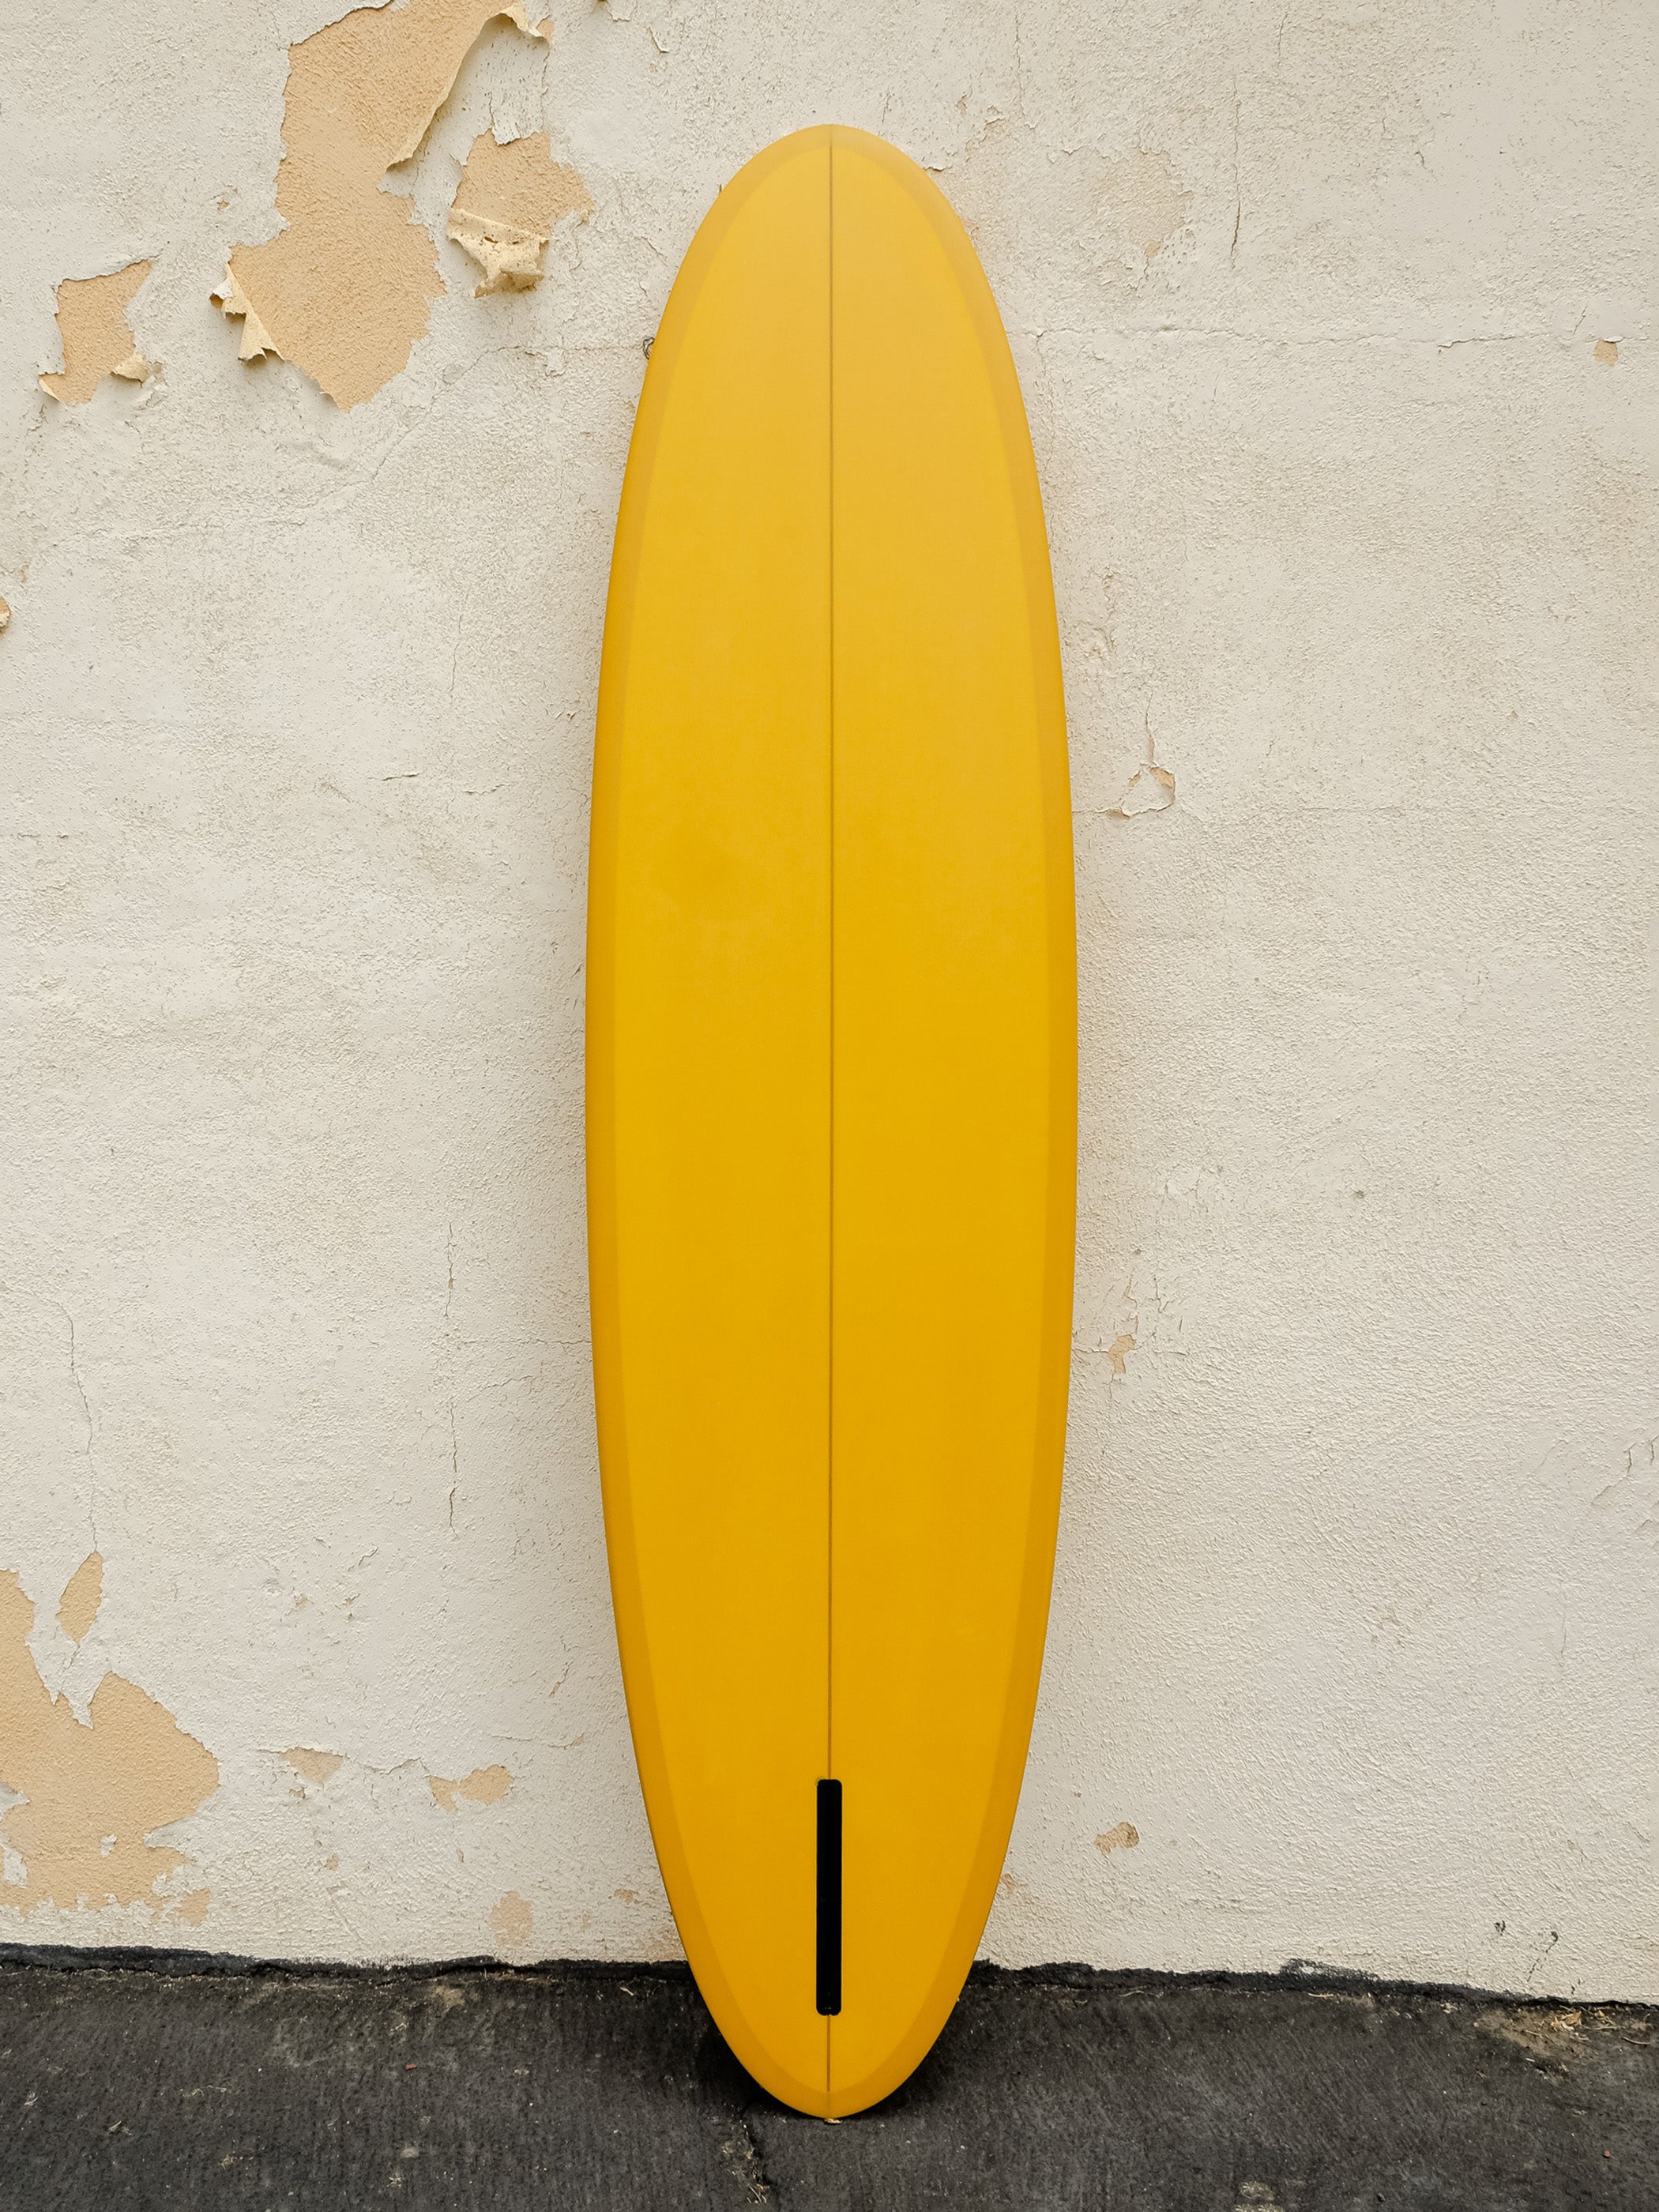 Tyler Warren | Function Hull 7’6” Harvest Gold Surfboard